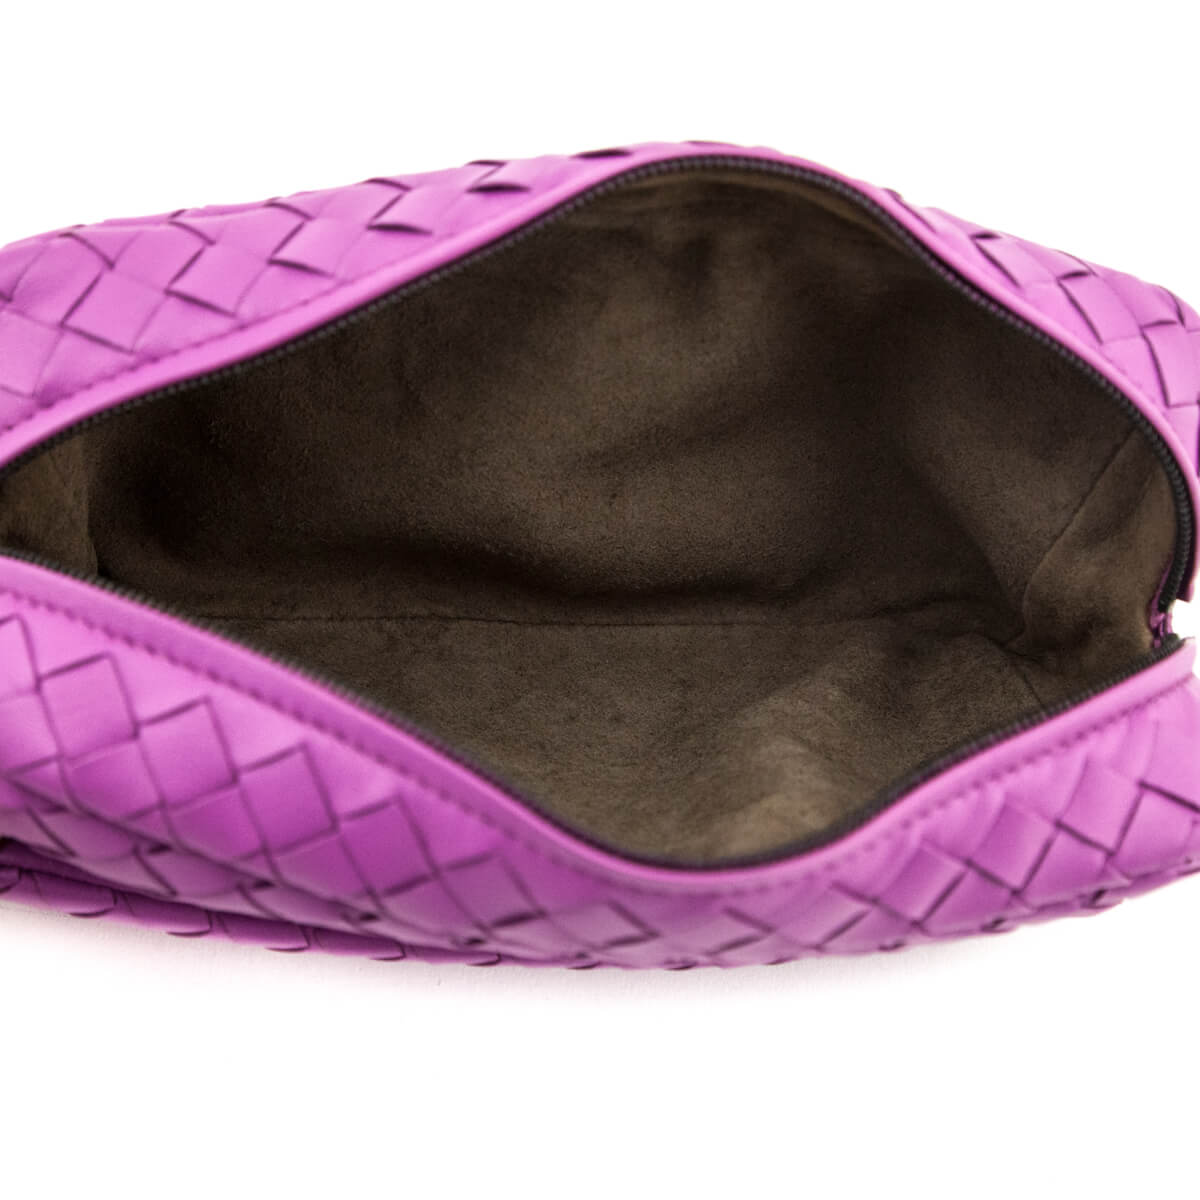 Purple Bottega Veneta Intrecciato The Mini Pouch Crossoutdoor Bag, EverlastsidingShops Revival